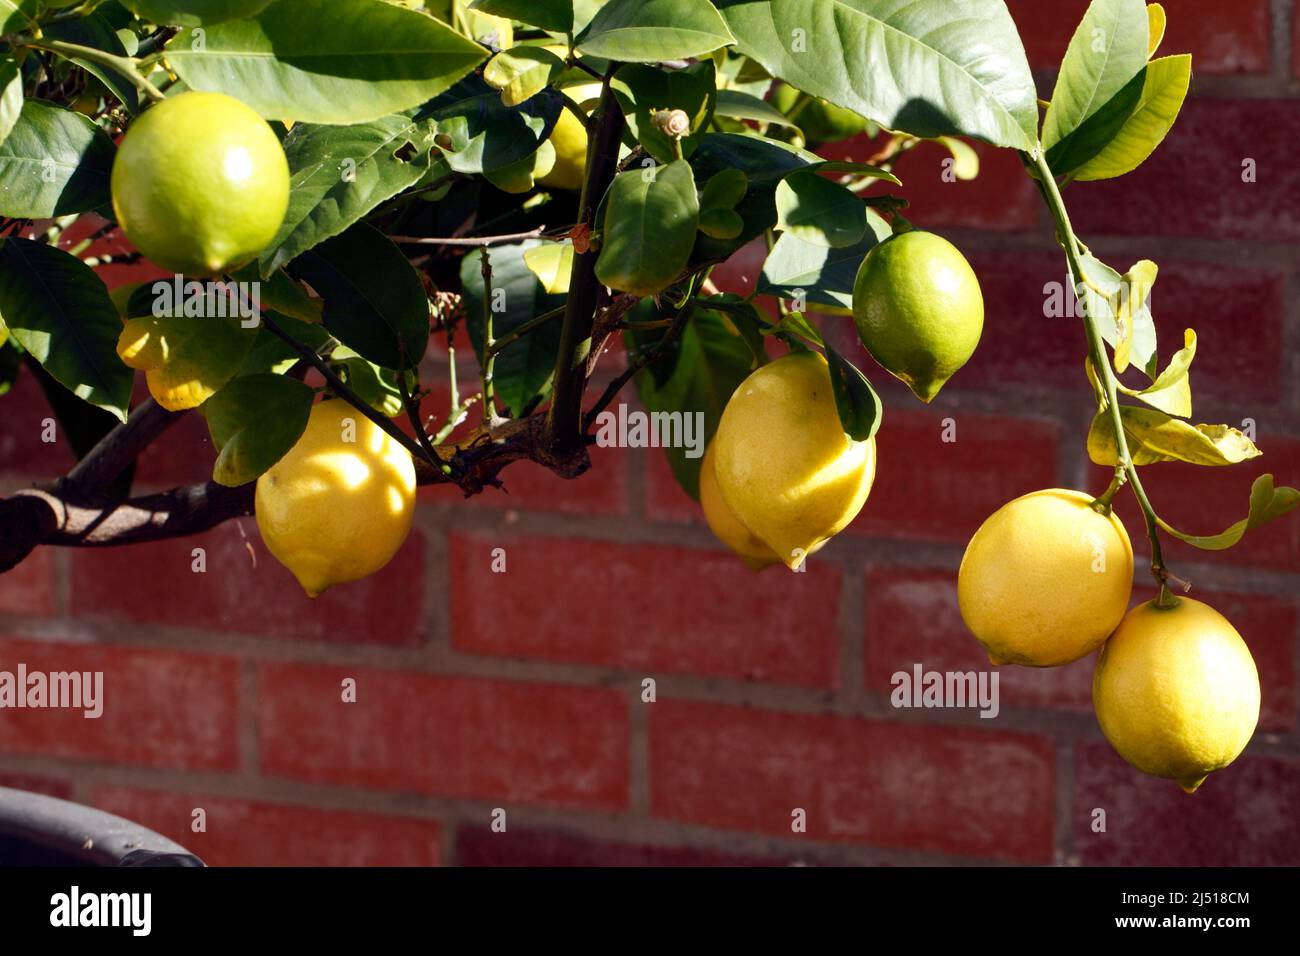 Citrus x Meyen ' Meyer' Lemon variety. Stock Photo